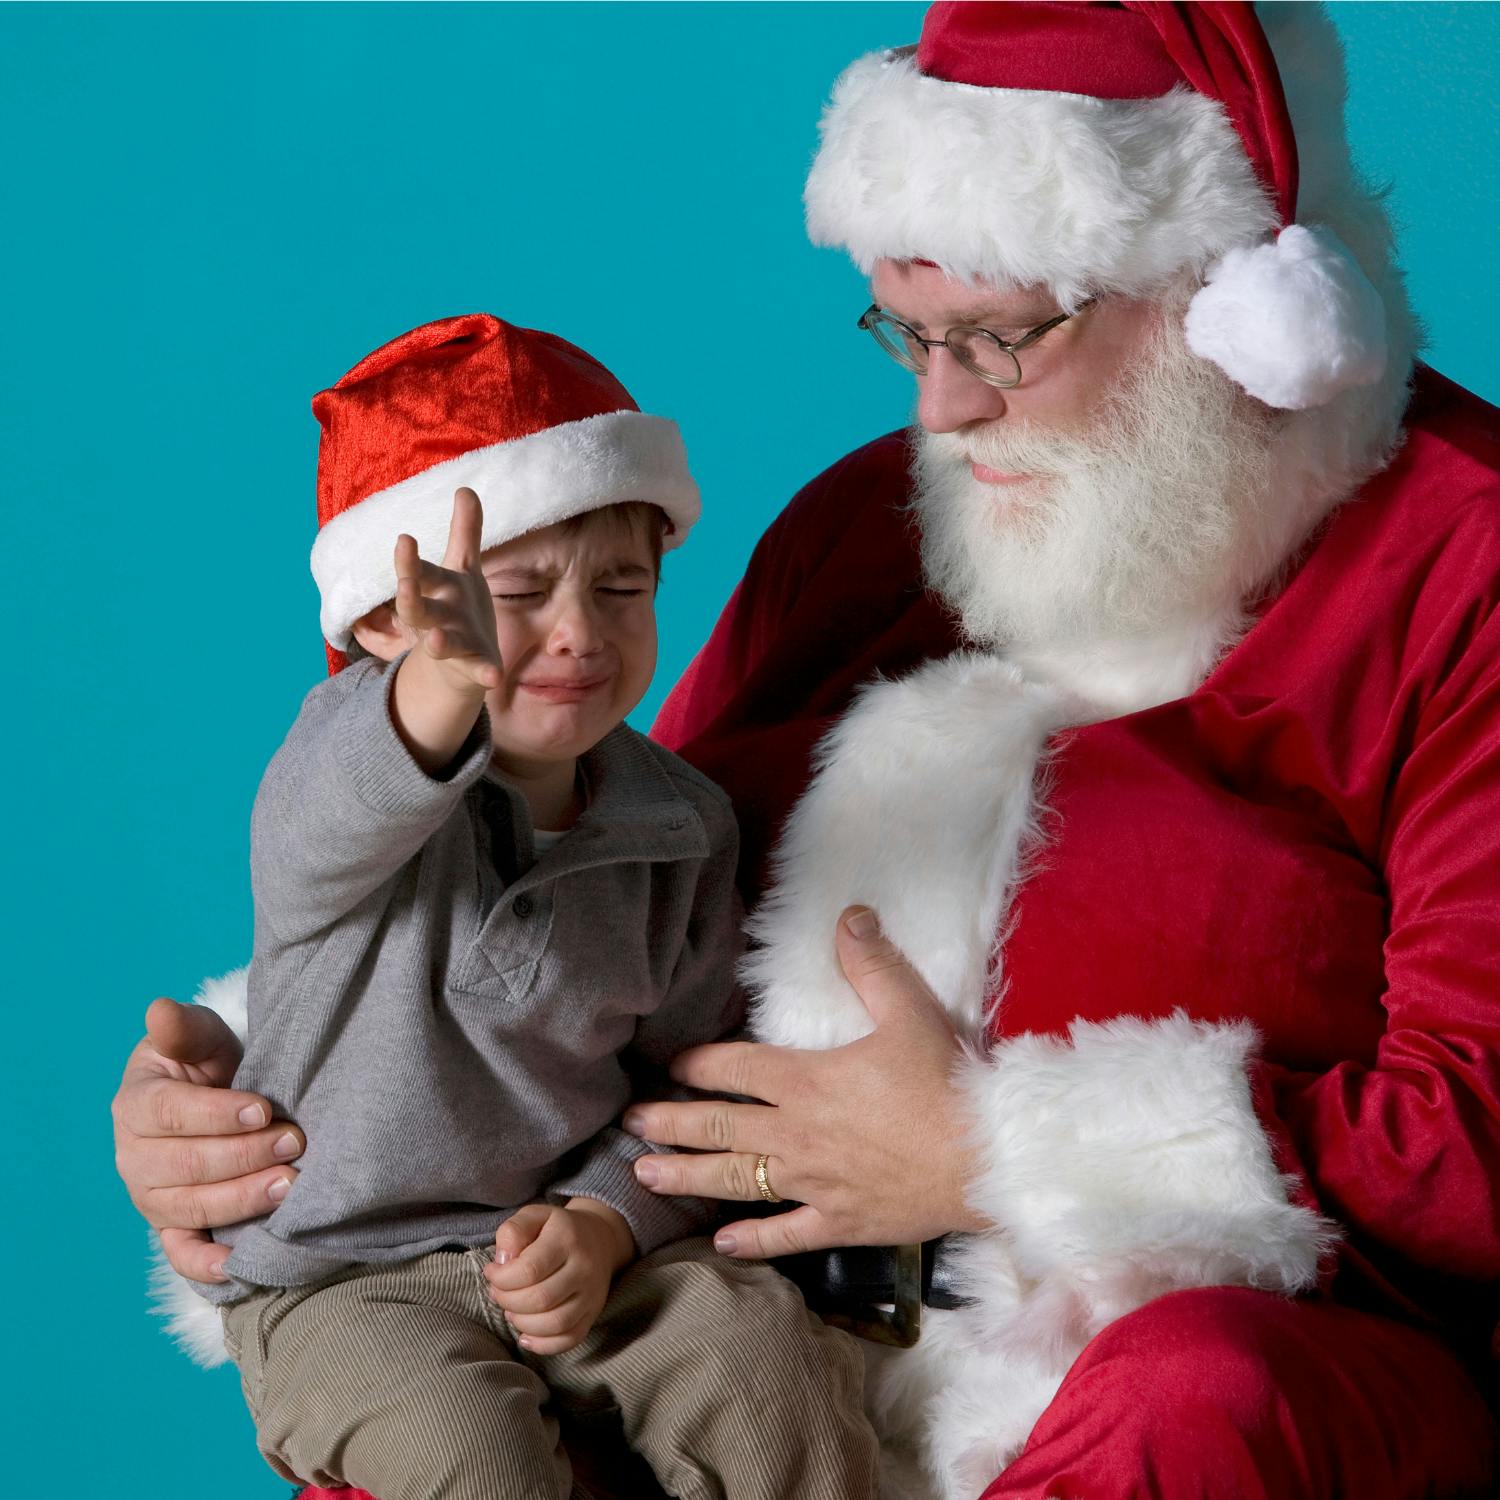 Parenting: My son is afraid of Santa Claus